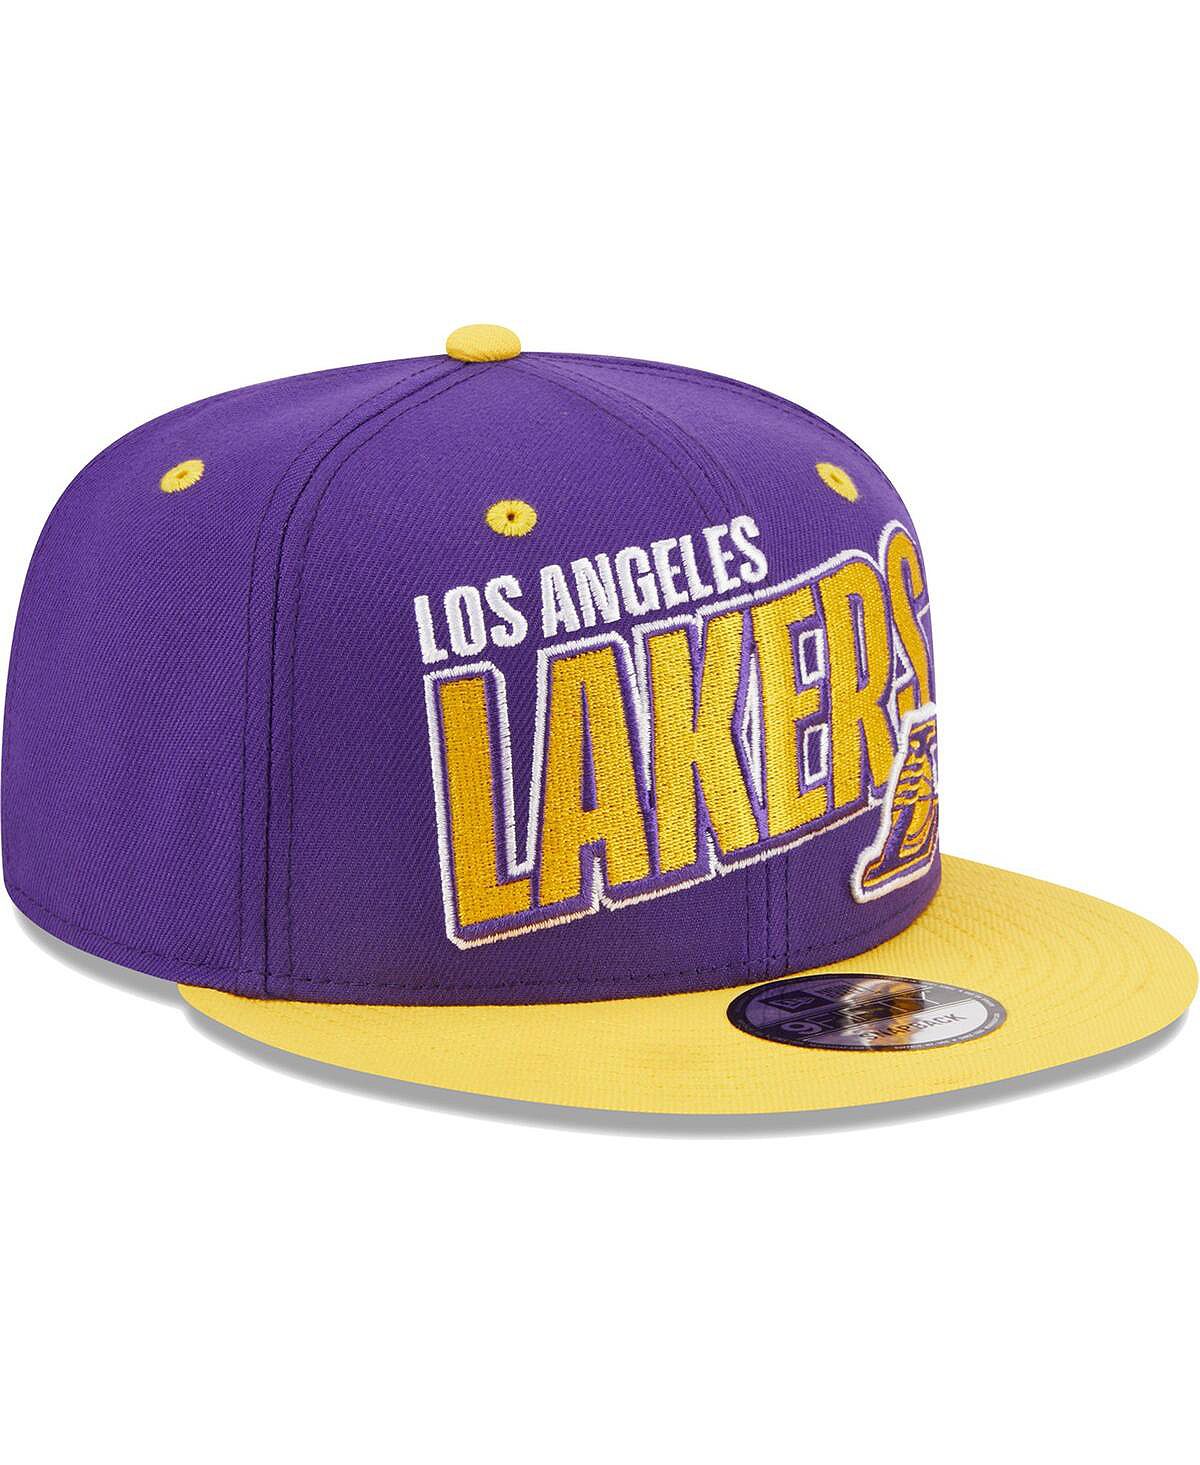 Мужская фиолетово-золотая кепка Los Angeles Lakers Stacked скошенная двухцветная кепка 9FIFTY Snapback New Era